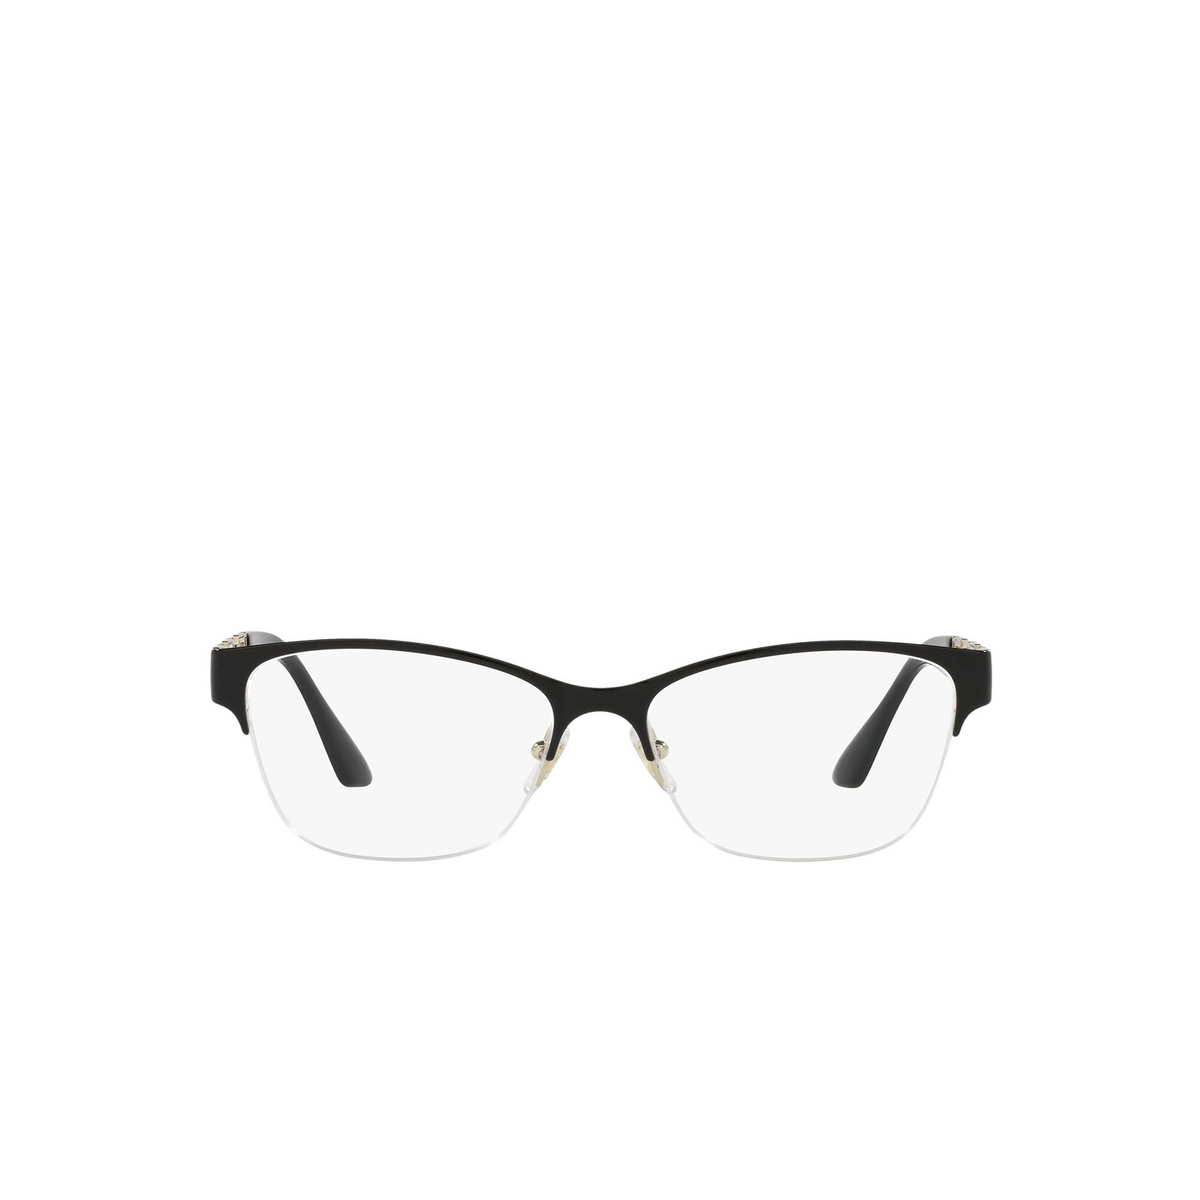 Versace® Cat-eye Eyeglasses: VE1270 color Black 1433 - front view.